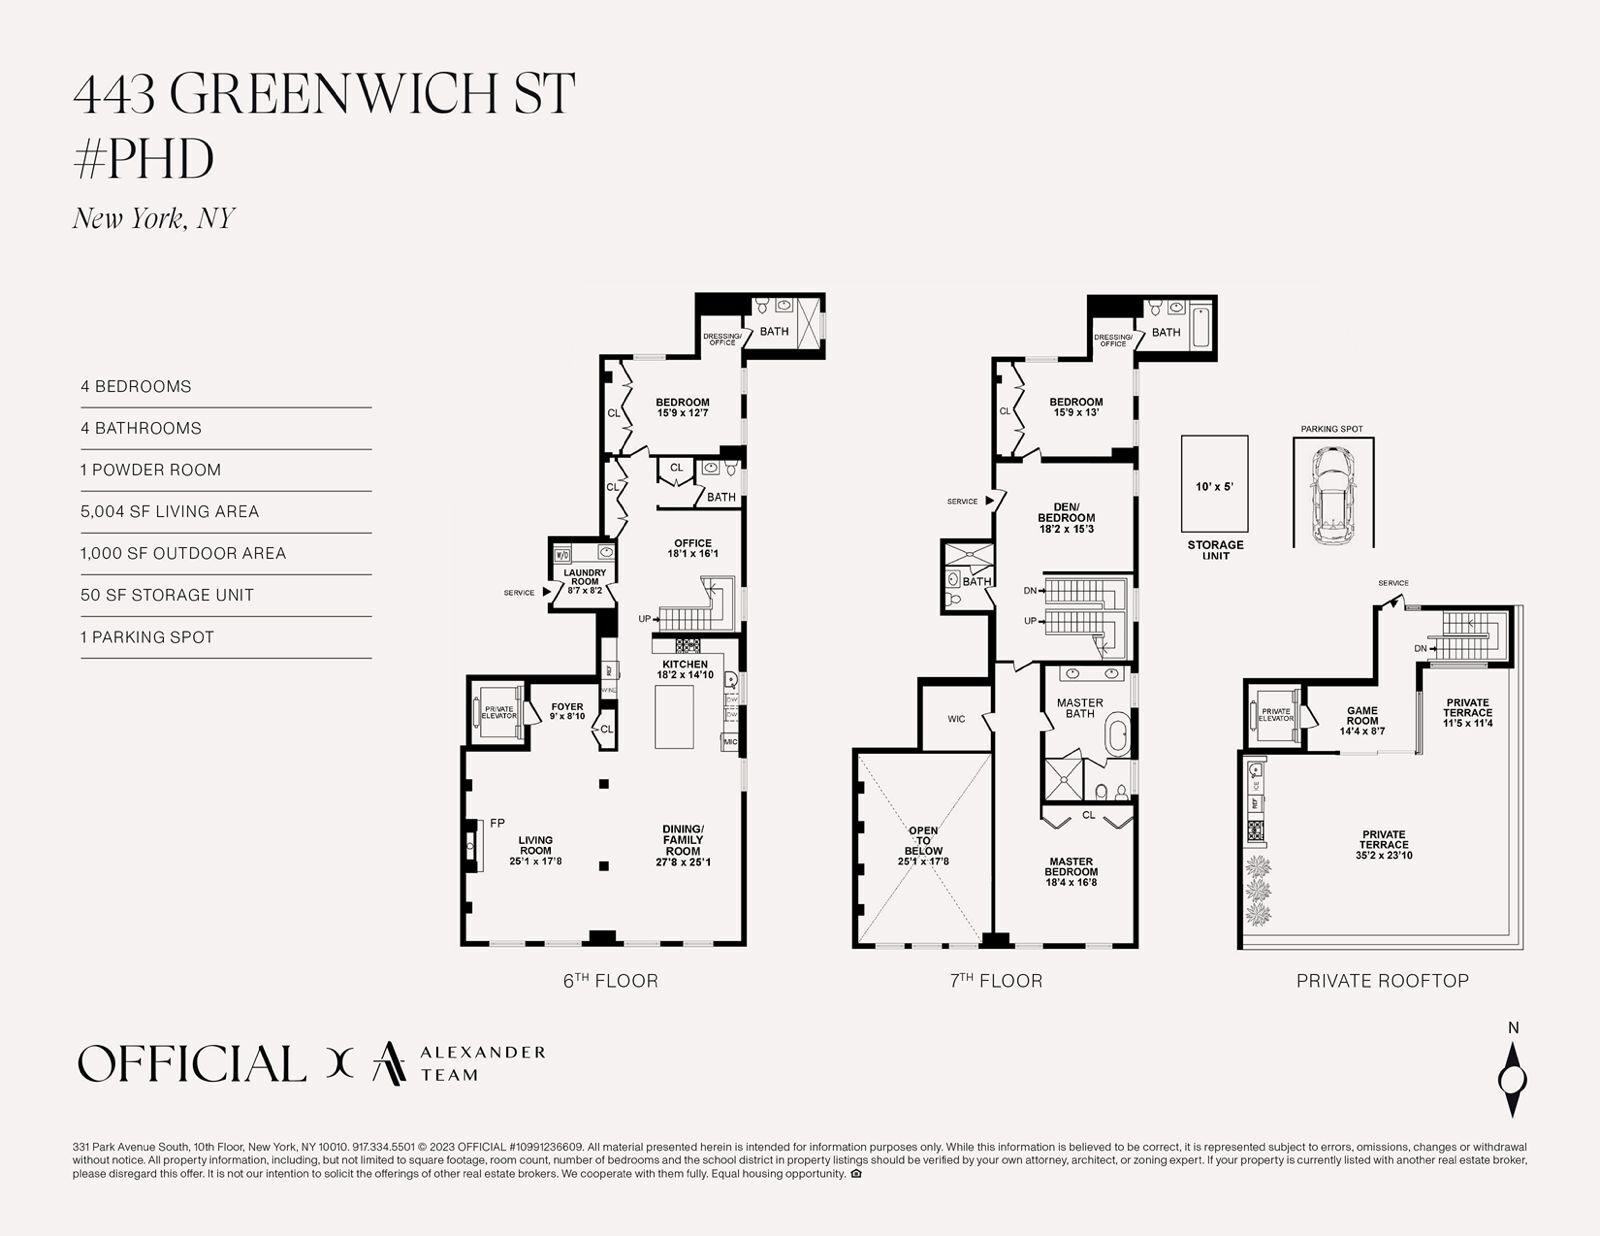 Floorplan for 443 Greenwich Street, PHD